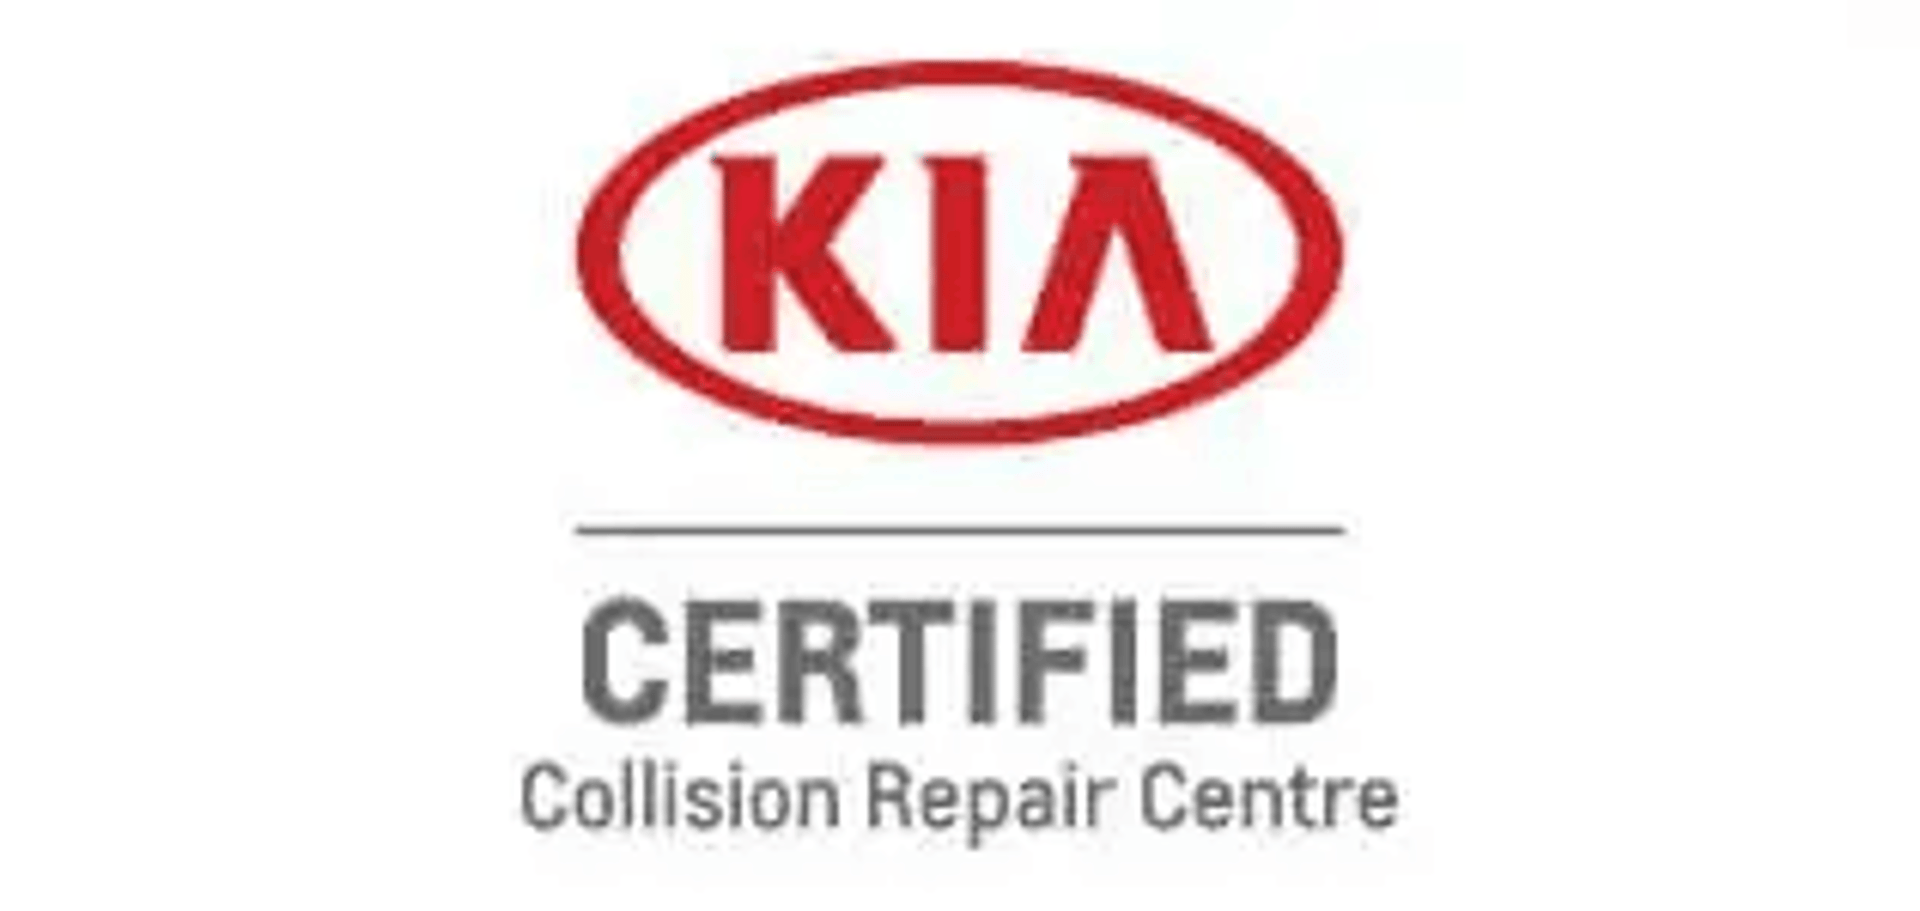 kia certified collision repair